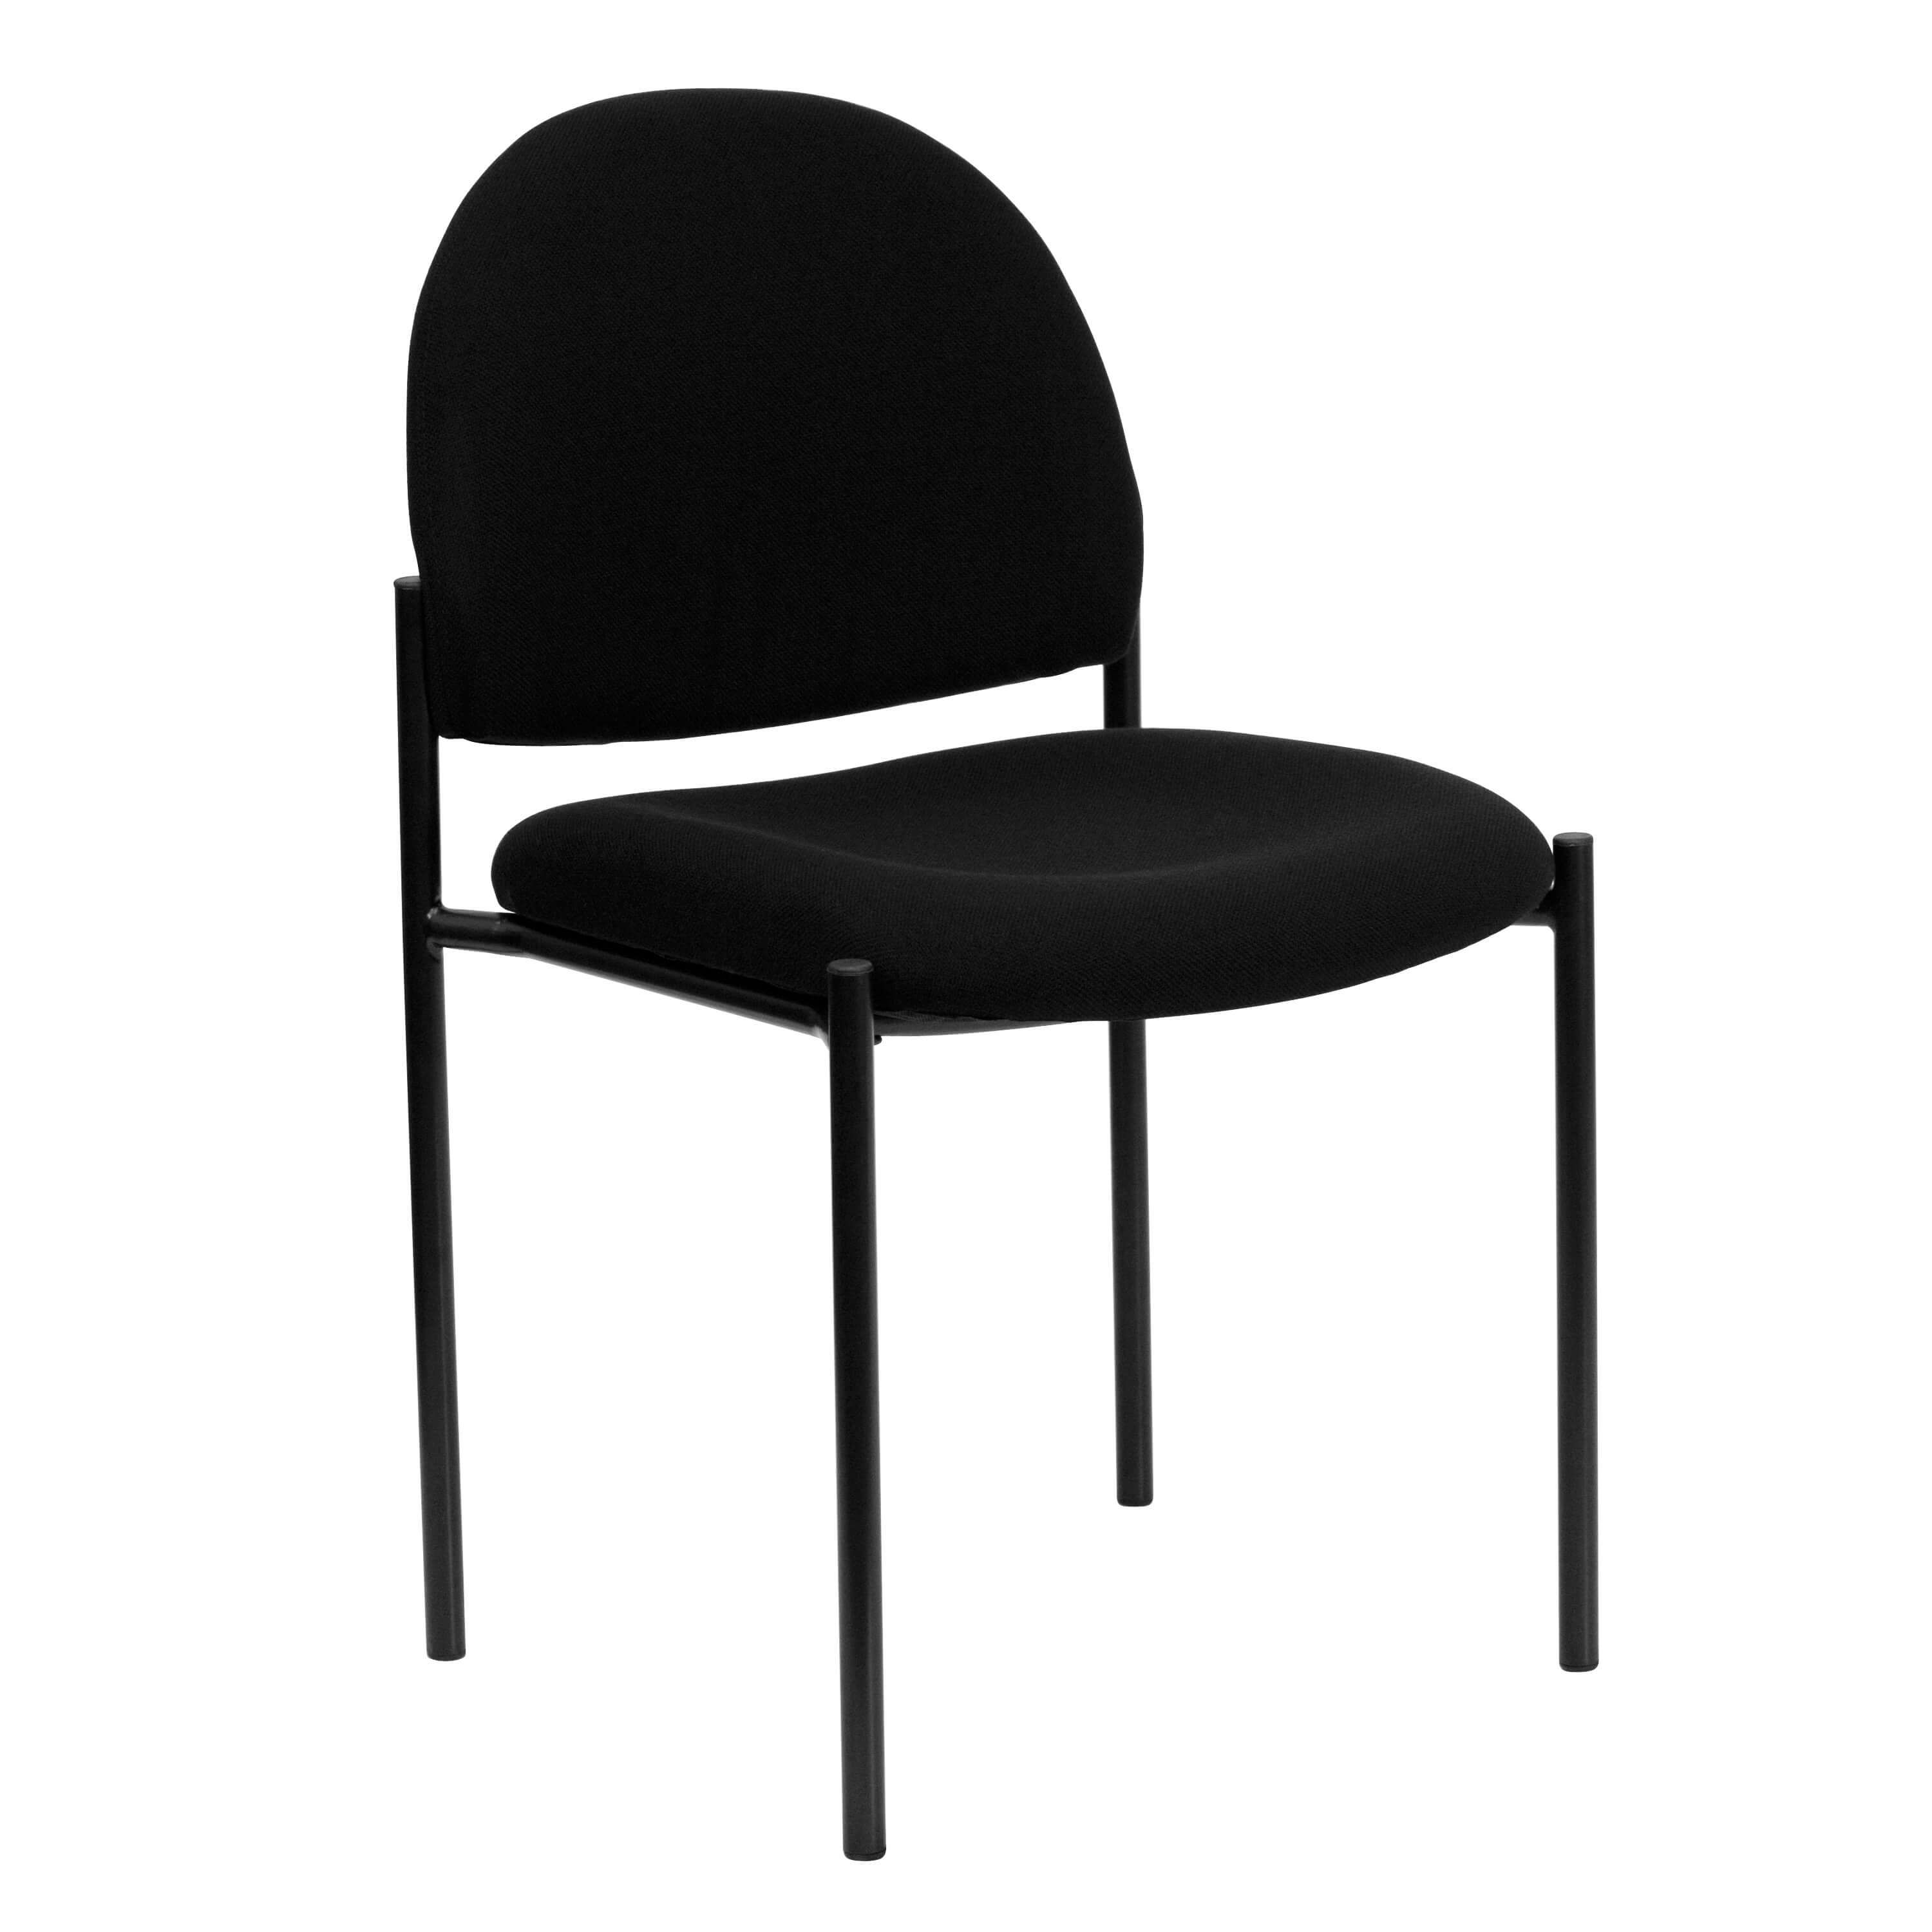 Stackable chairs CUB BT 515 1 BK GG FLA